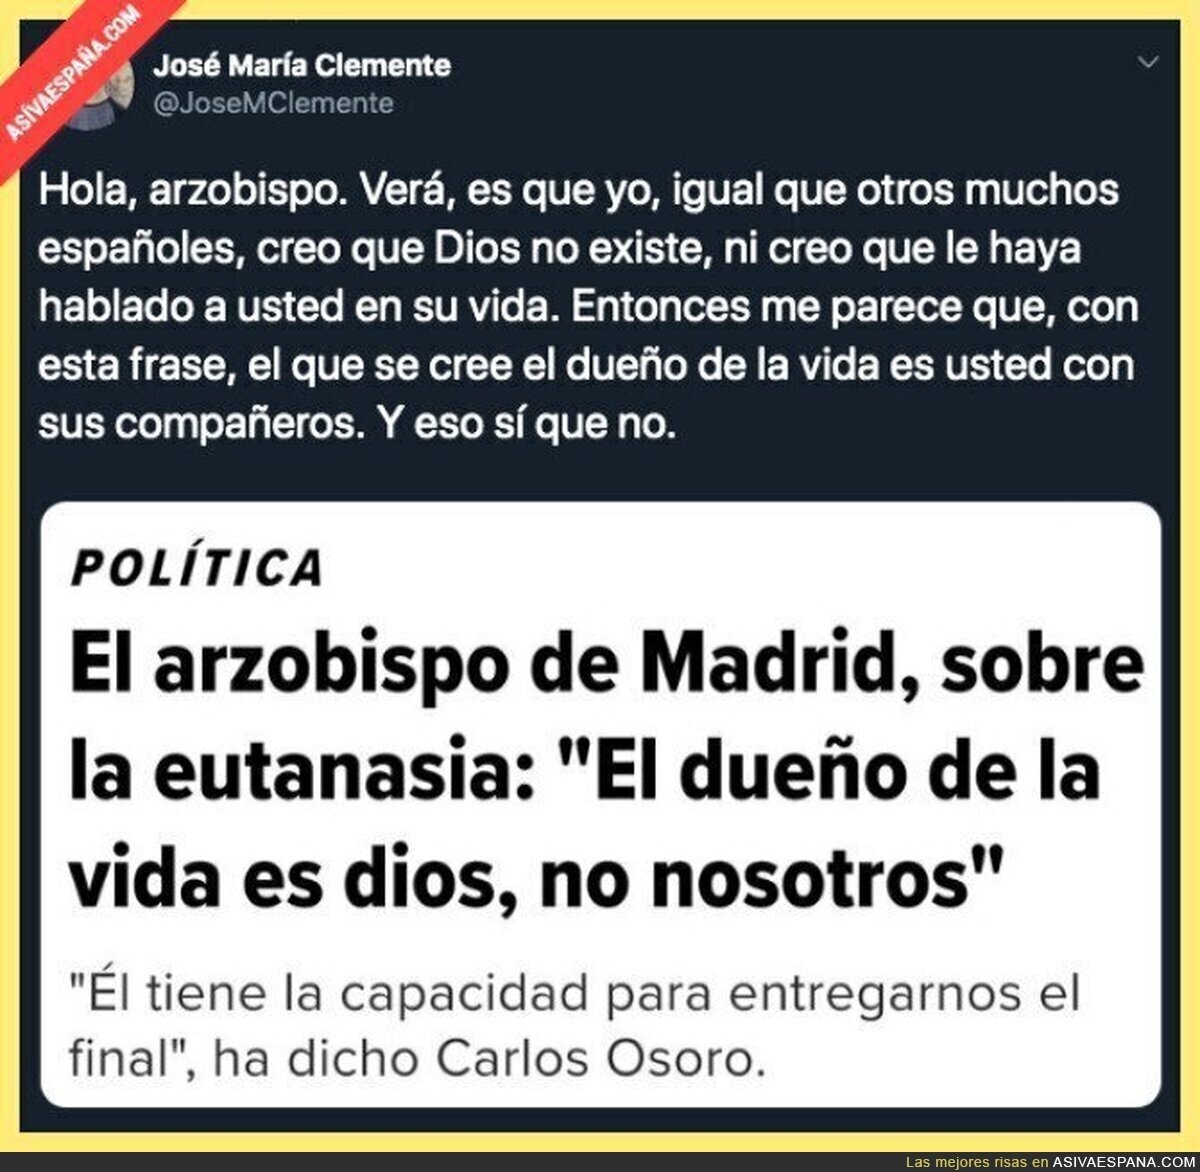 La polémica del arzobispo de Madrid y la eutanasia